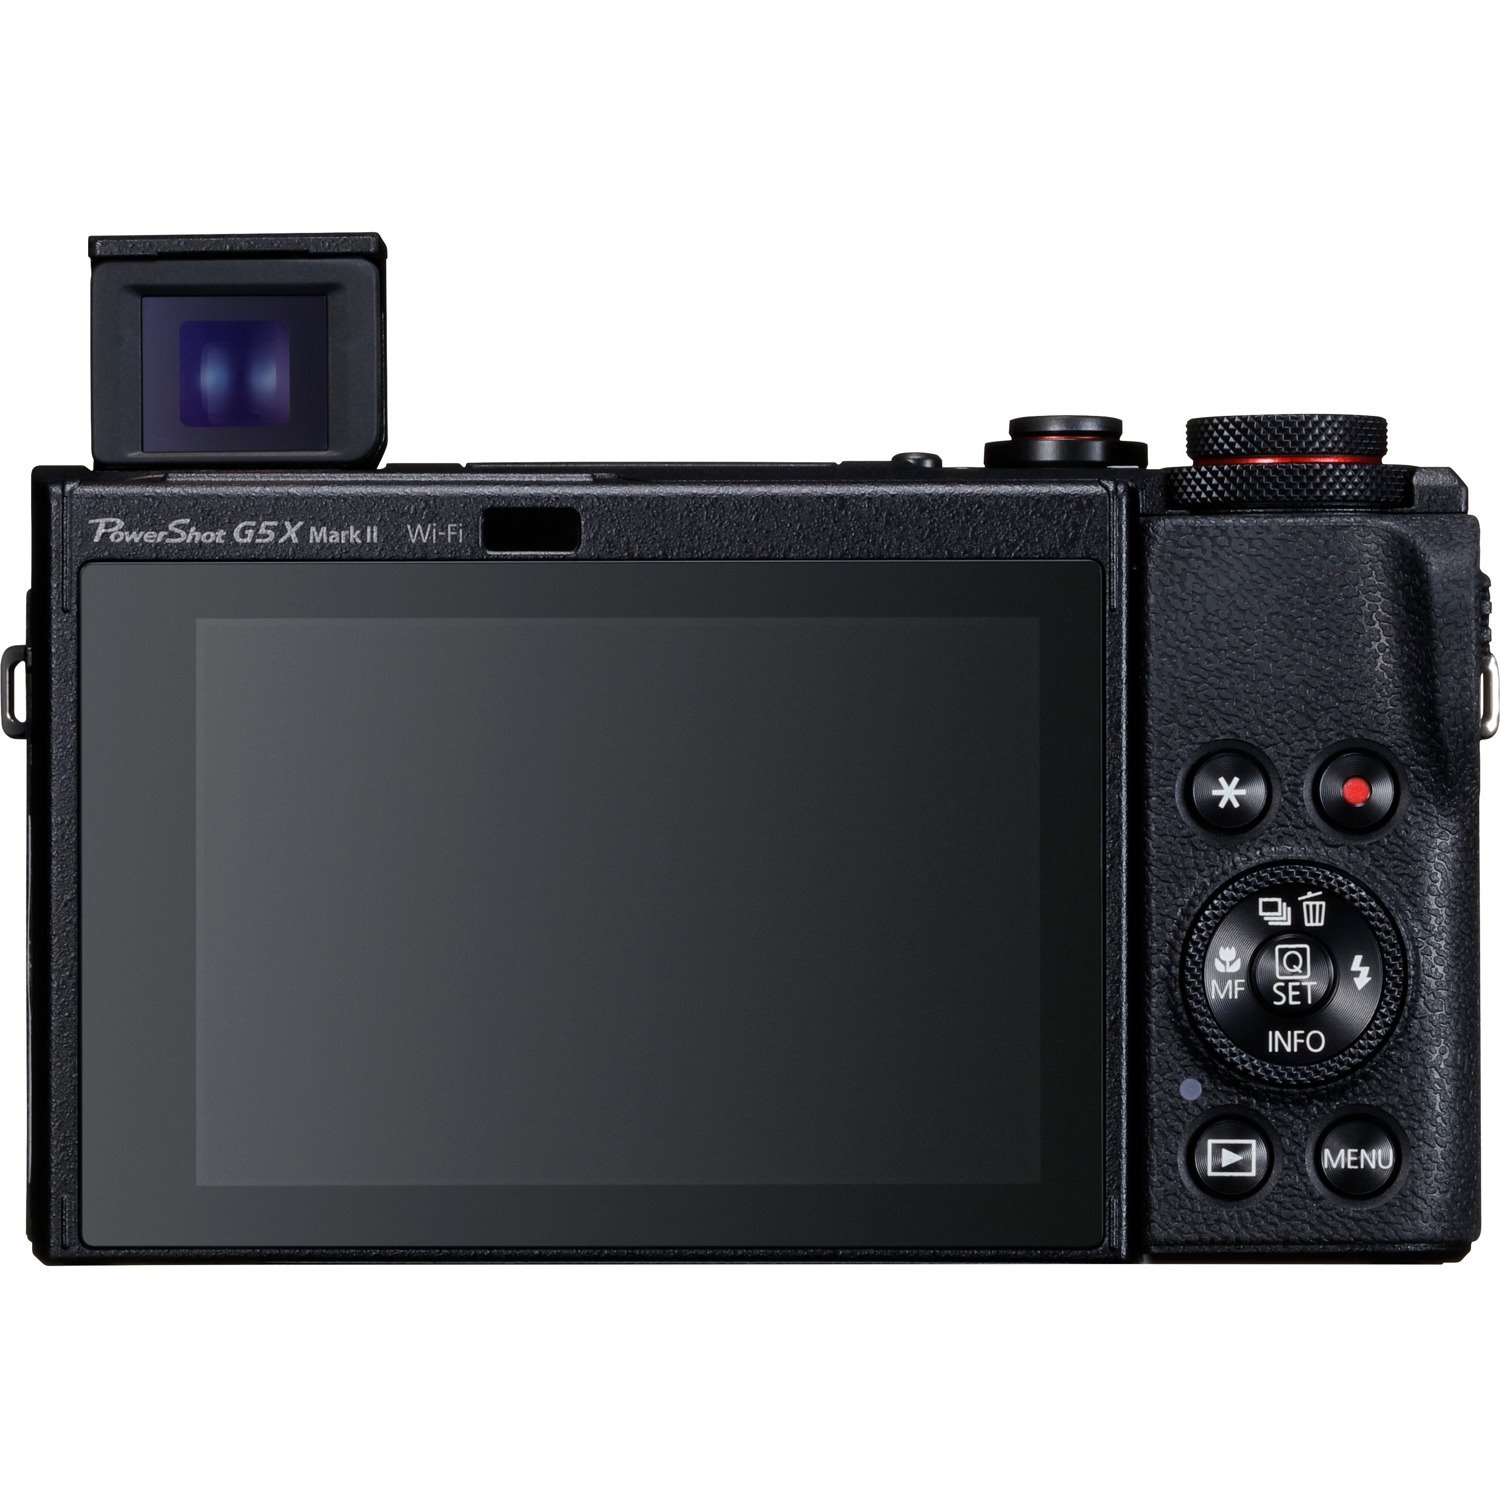 Canon PowerShot G5X Mark II 20.1 Megapixel Compact Camera